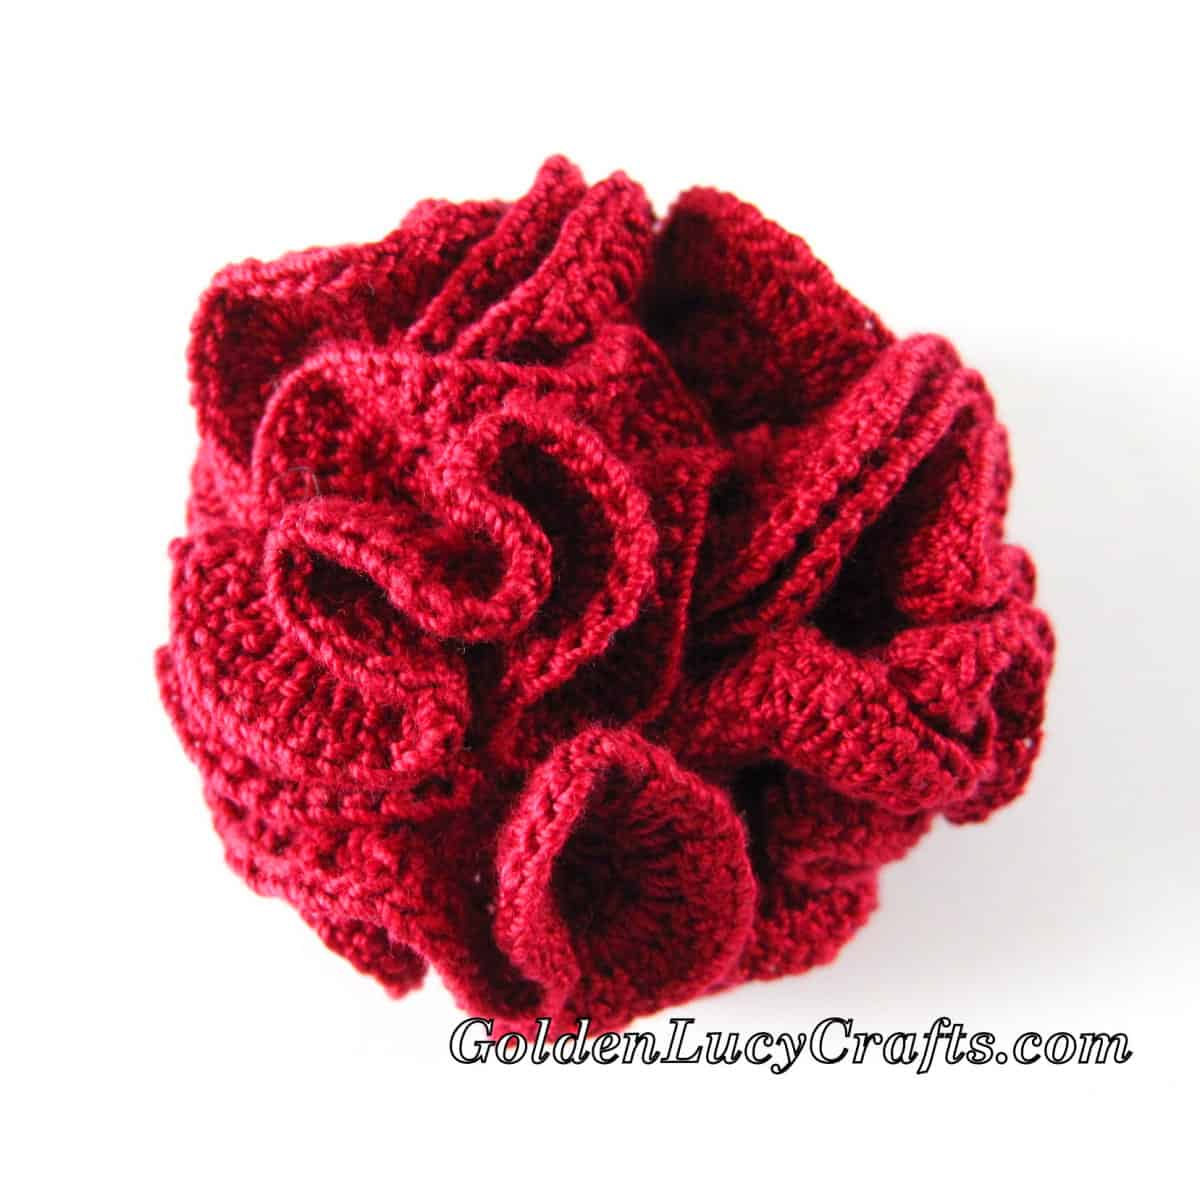 Crochet hyperbolic coral in dark red color.